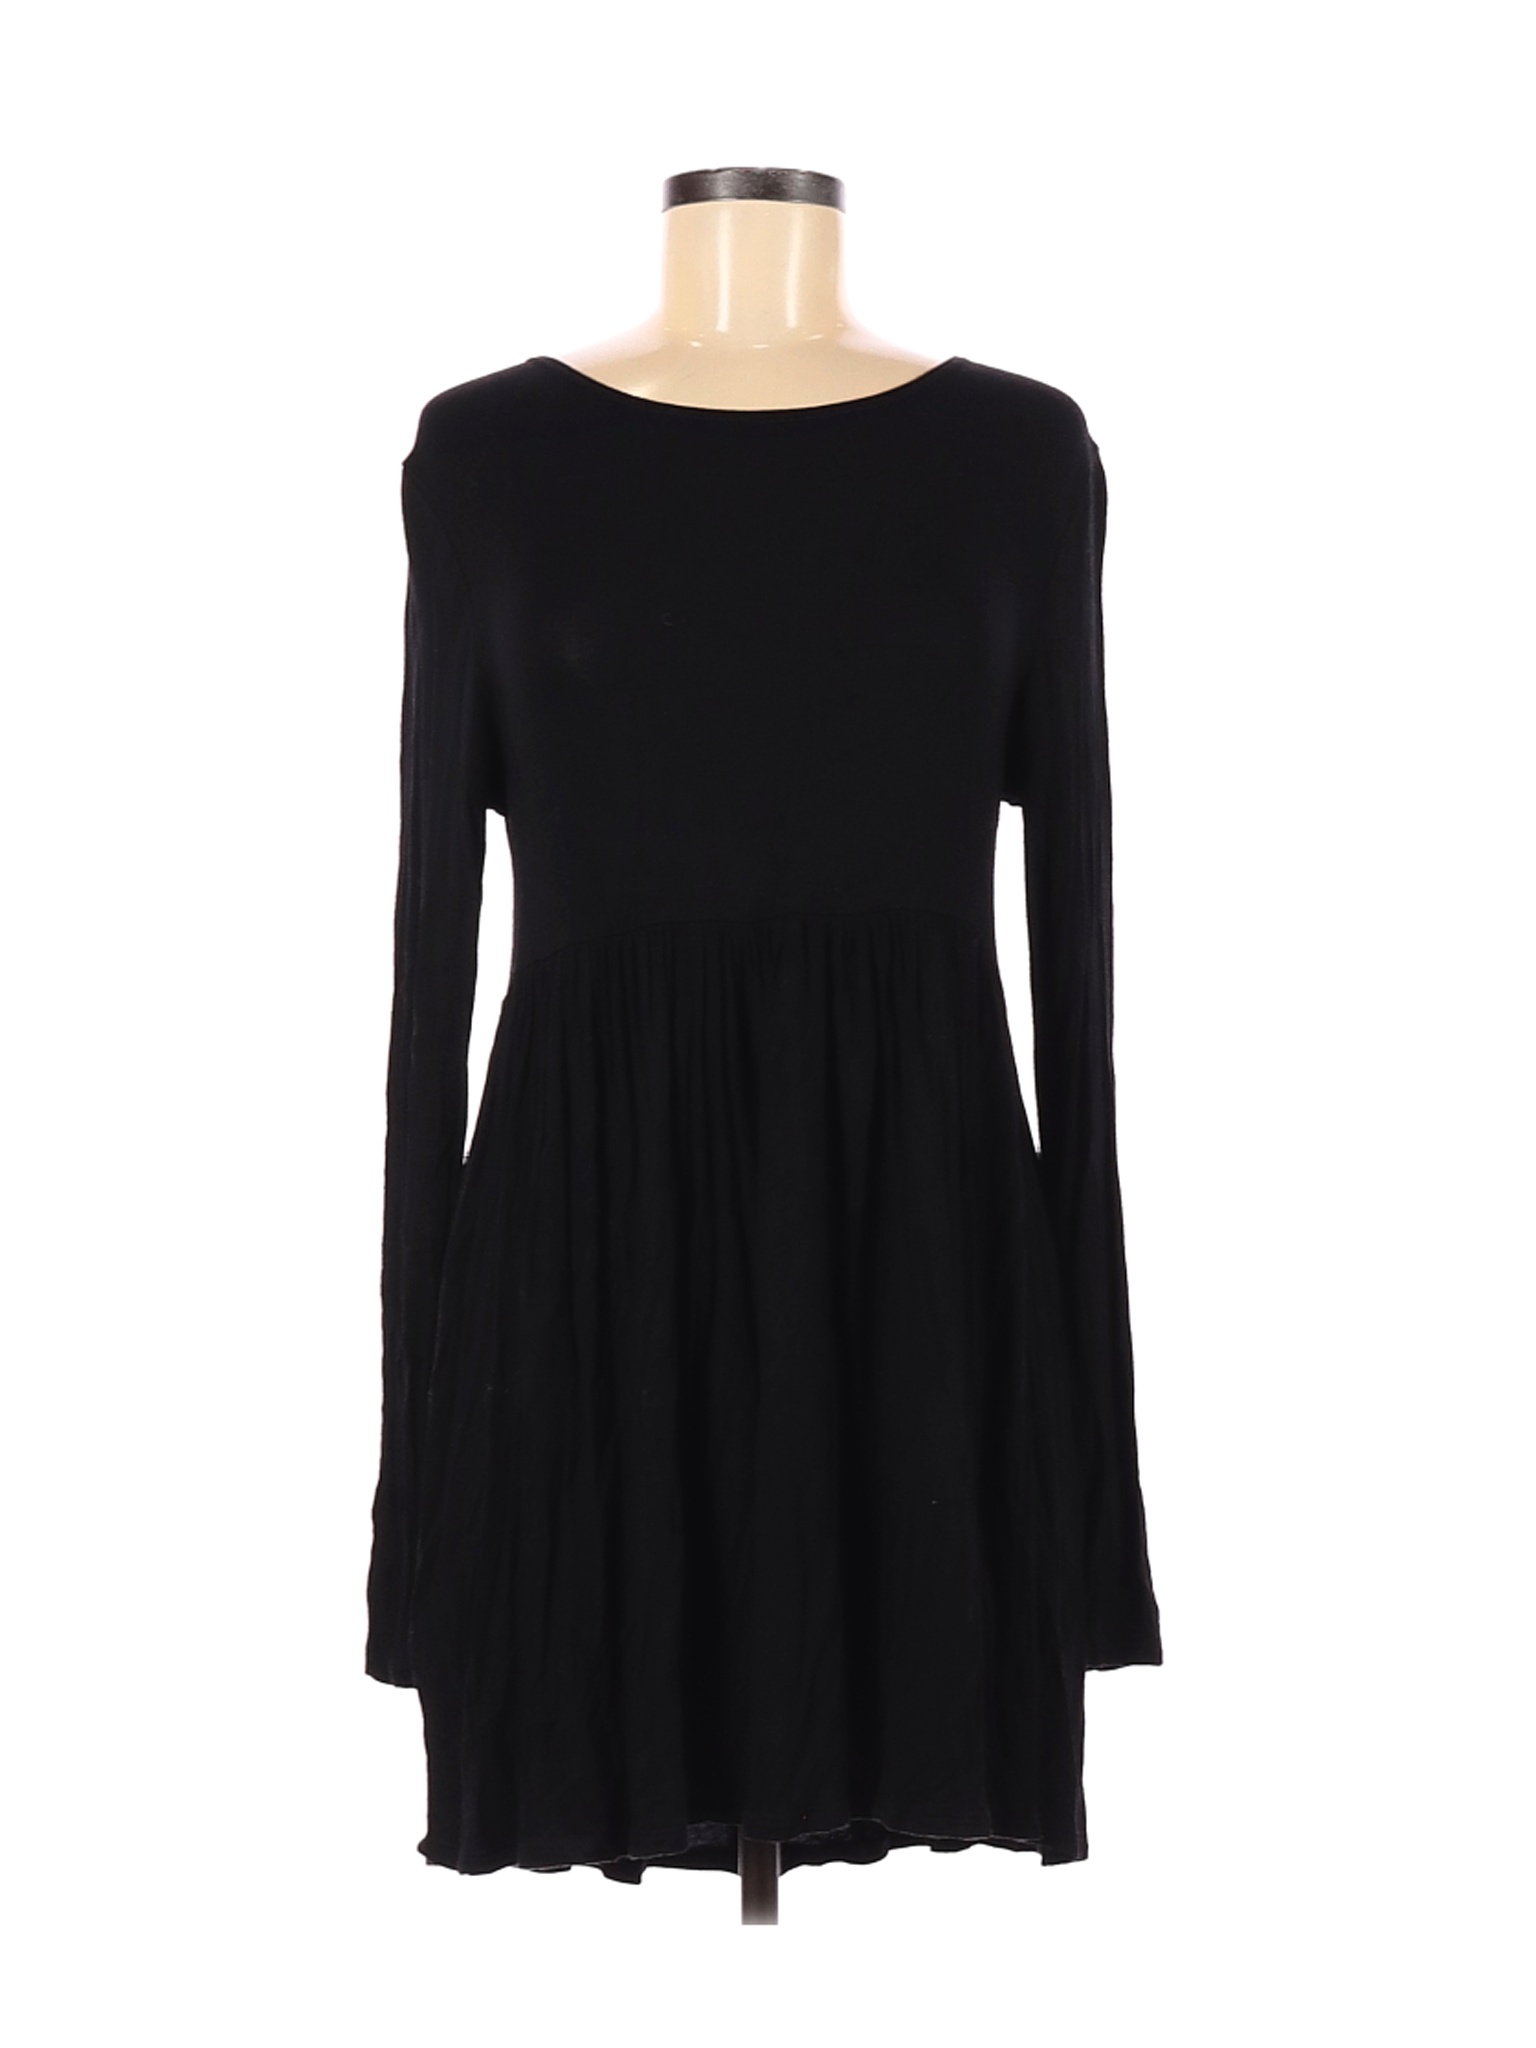 Zenana Premium Women Black Casual Dress M | eBay